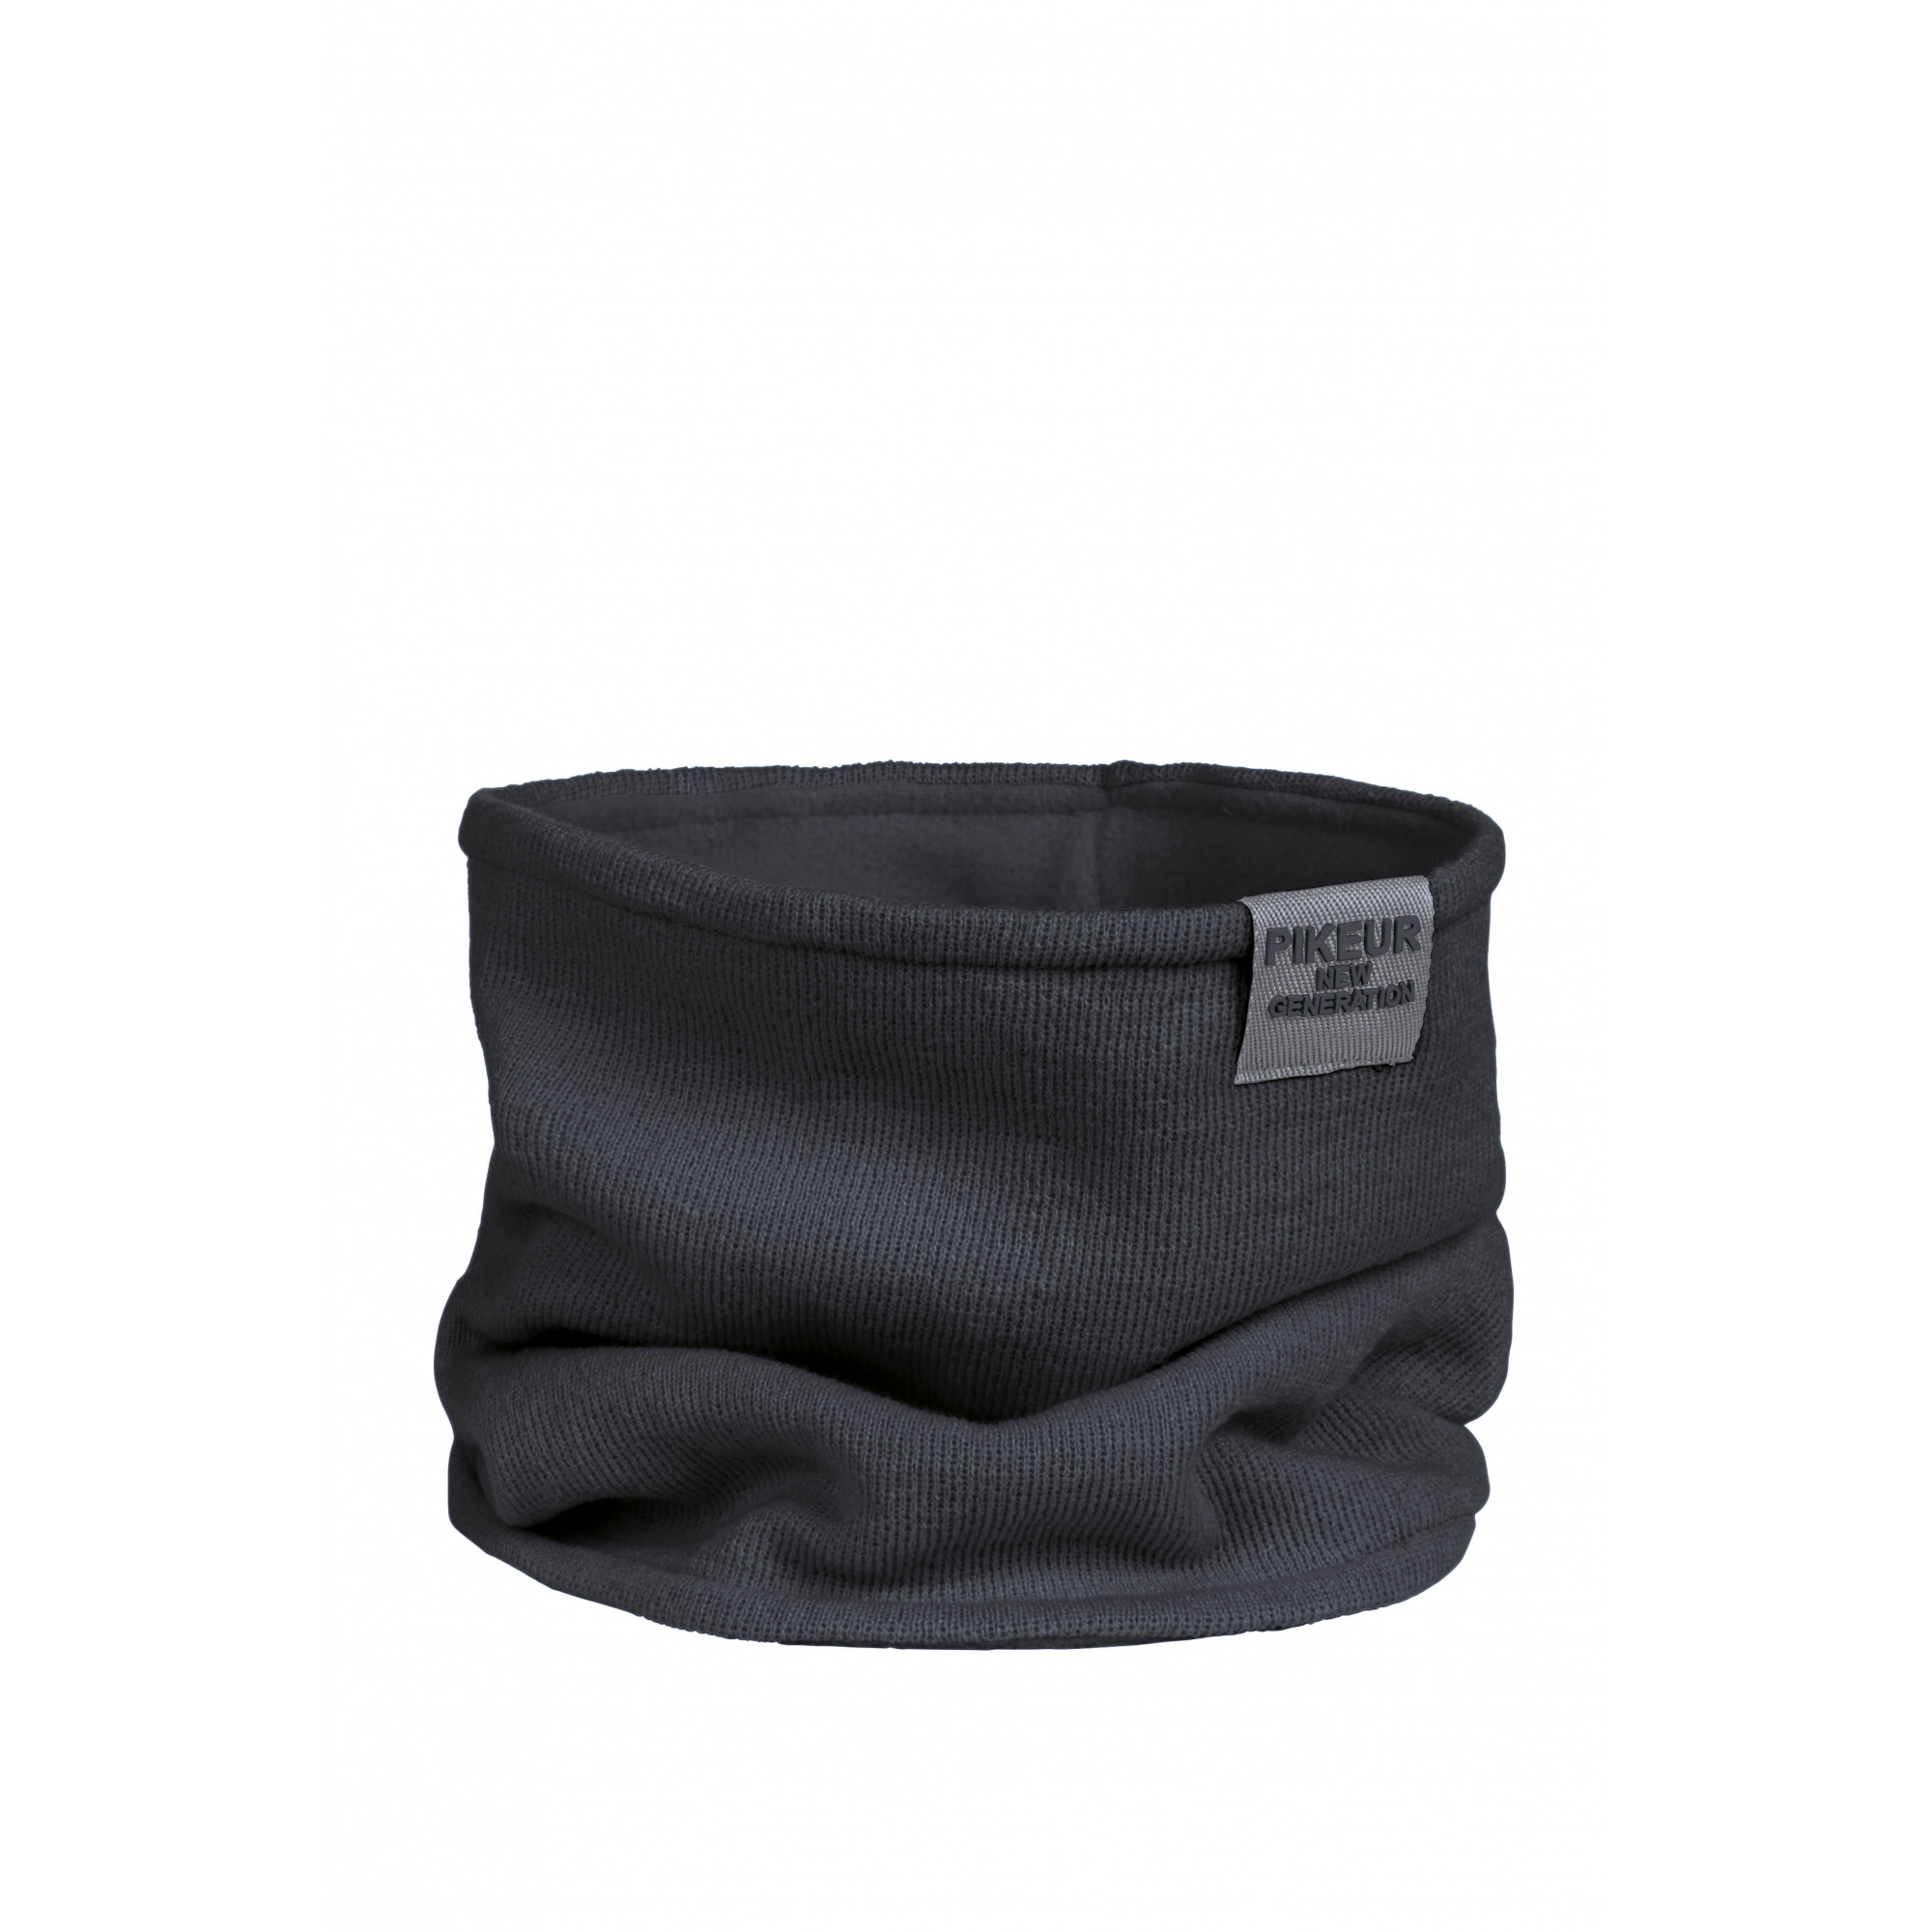 Sterfano Lusi Komfortabel Unisex Hedging Cap Saul Canelo Alvarez Hut Aus Wolle Black